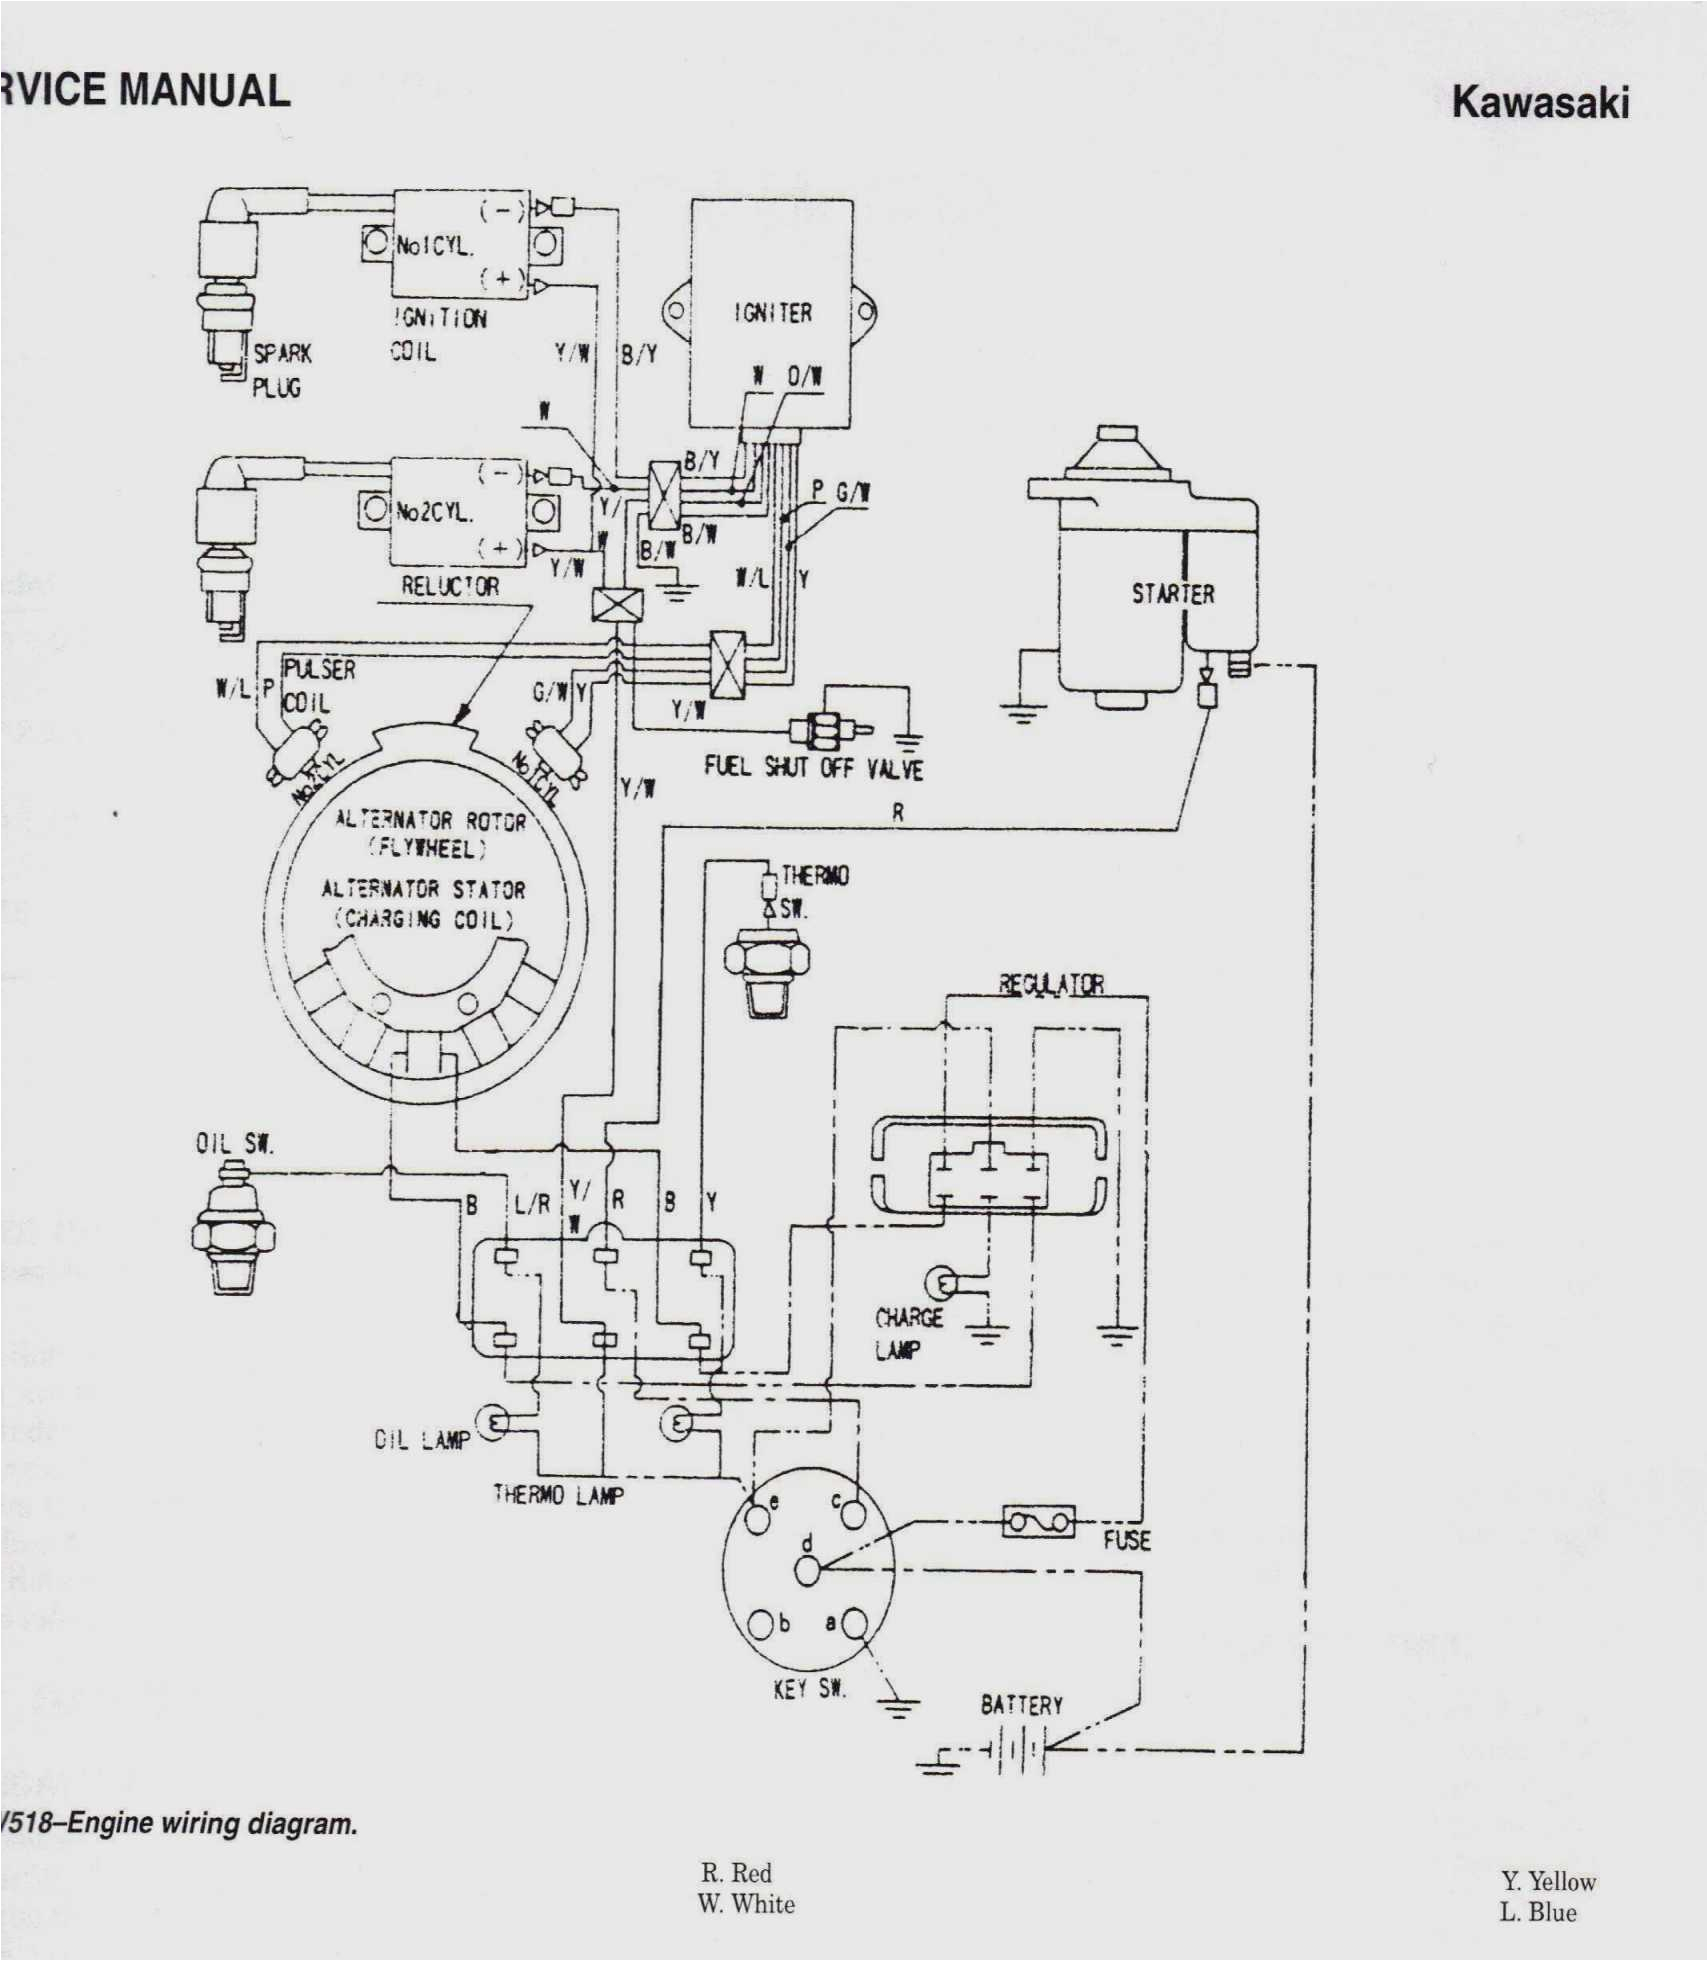 wiring diagram jd 4450 wiring diagram expert jd 4450 wiring diagram jd 4450 wiring diagram